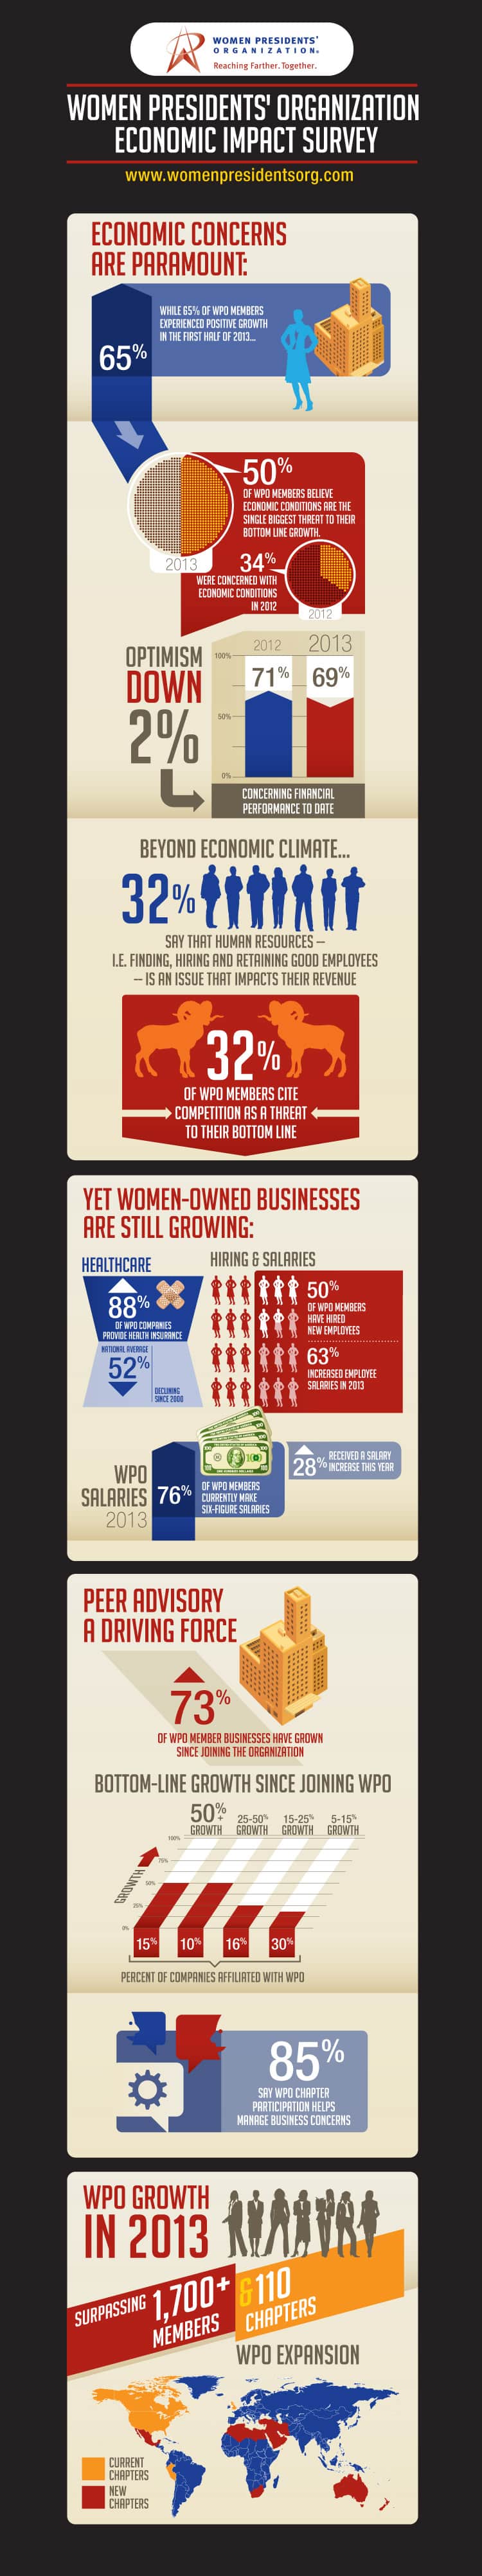 women presidents organization economic impact survey infographic